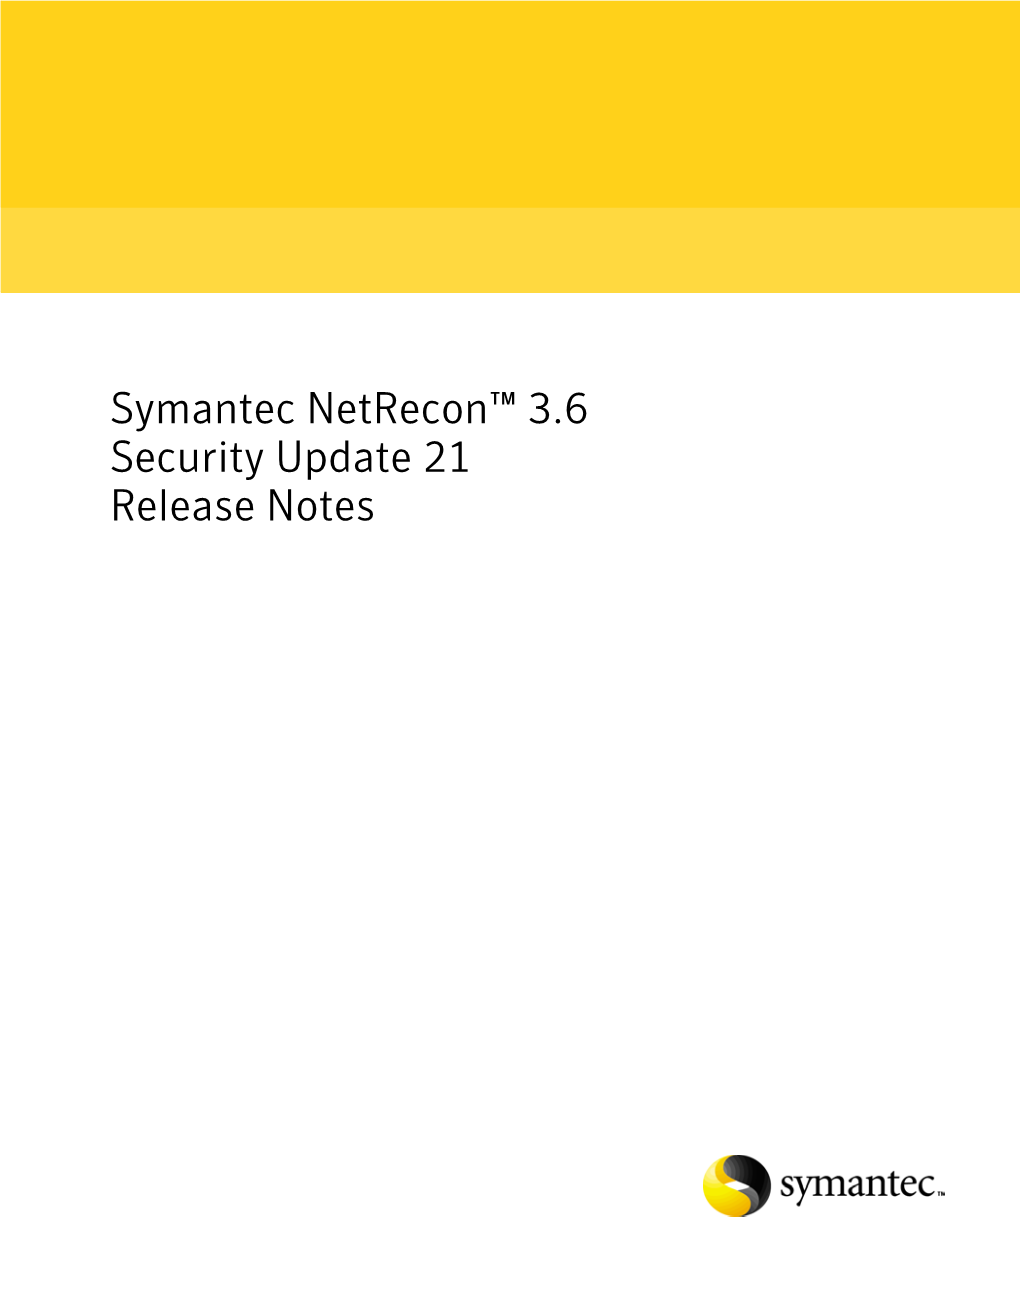 Symantec Netrecon™ 3.6 Security Update 21 Release Notes Symantec Netrecon Security Update 21 Release Notes